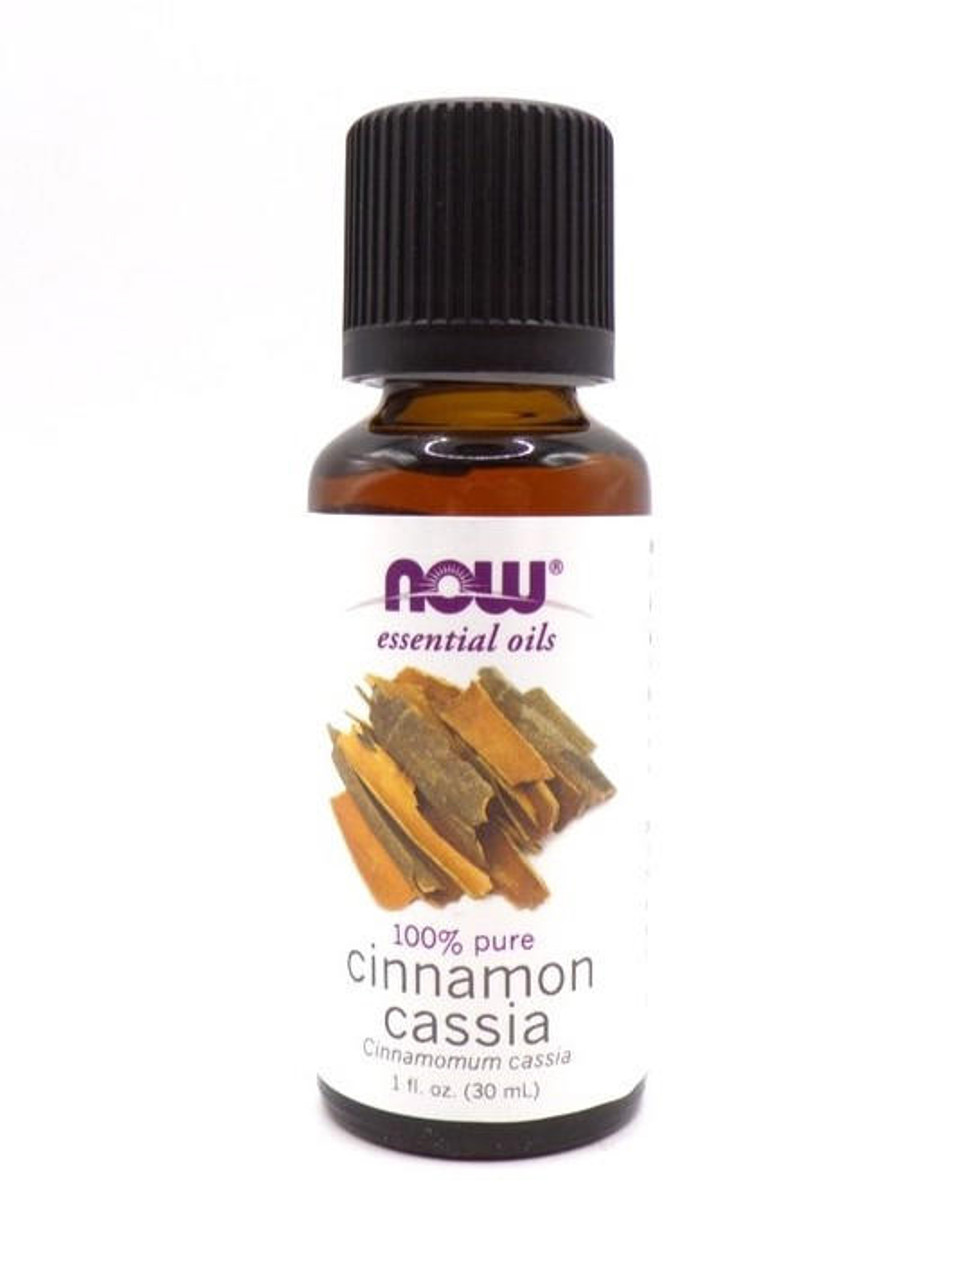 Cinnamon Bark Essential Oil - 16 oz - Organic | Mountain Rose Herbs